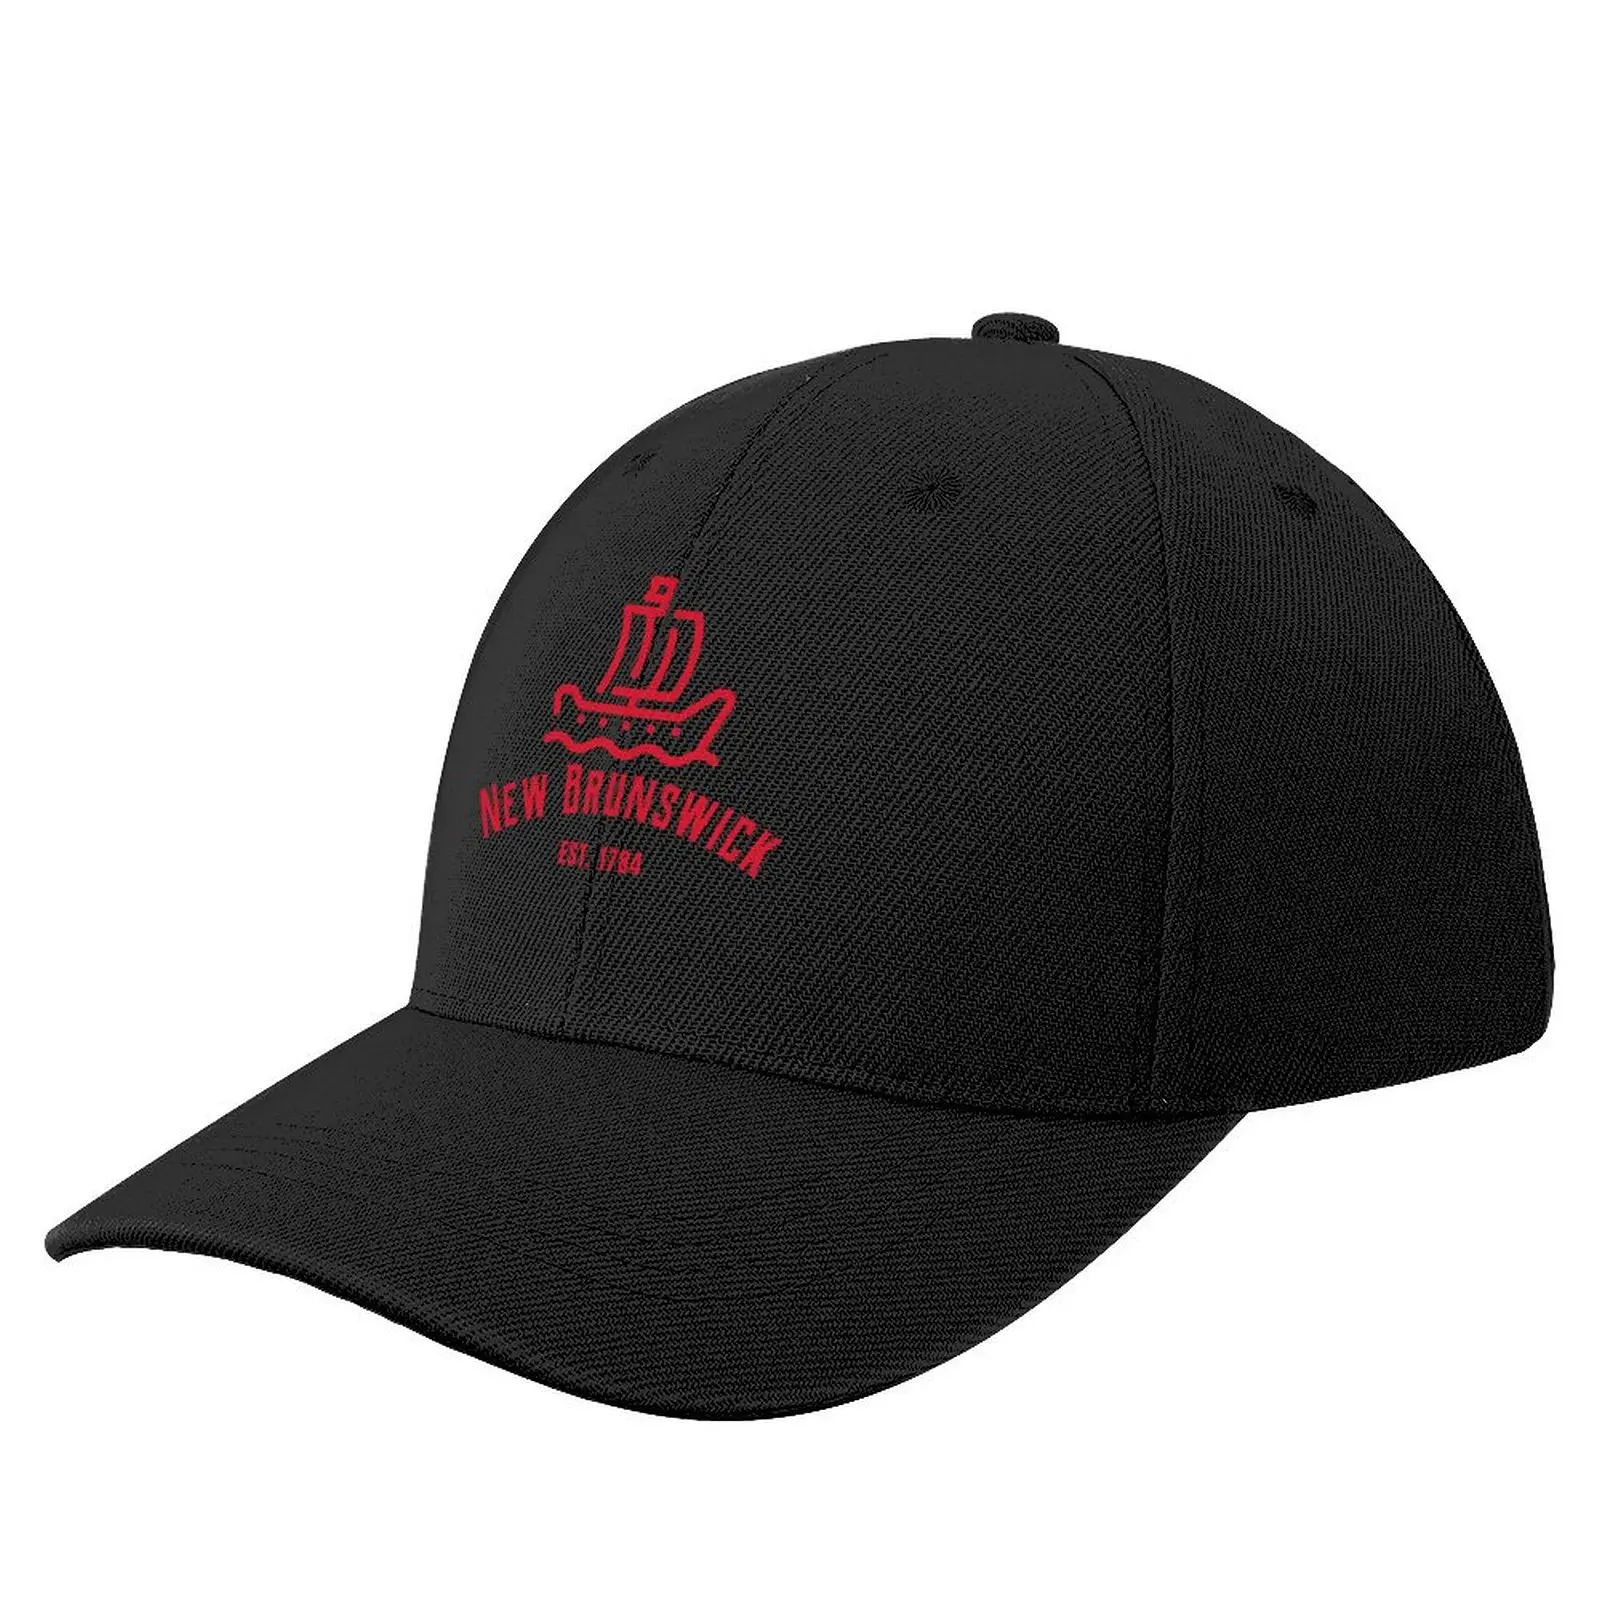 New Brunswick, Canada, est 1784 Baseball Cap Beach Hat Man For The Sun hard hat Elegant Women's Hats Men's